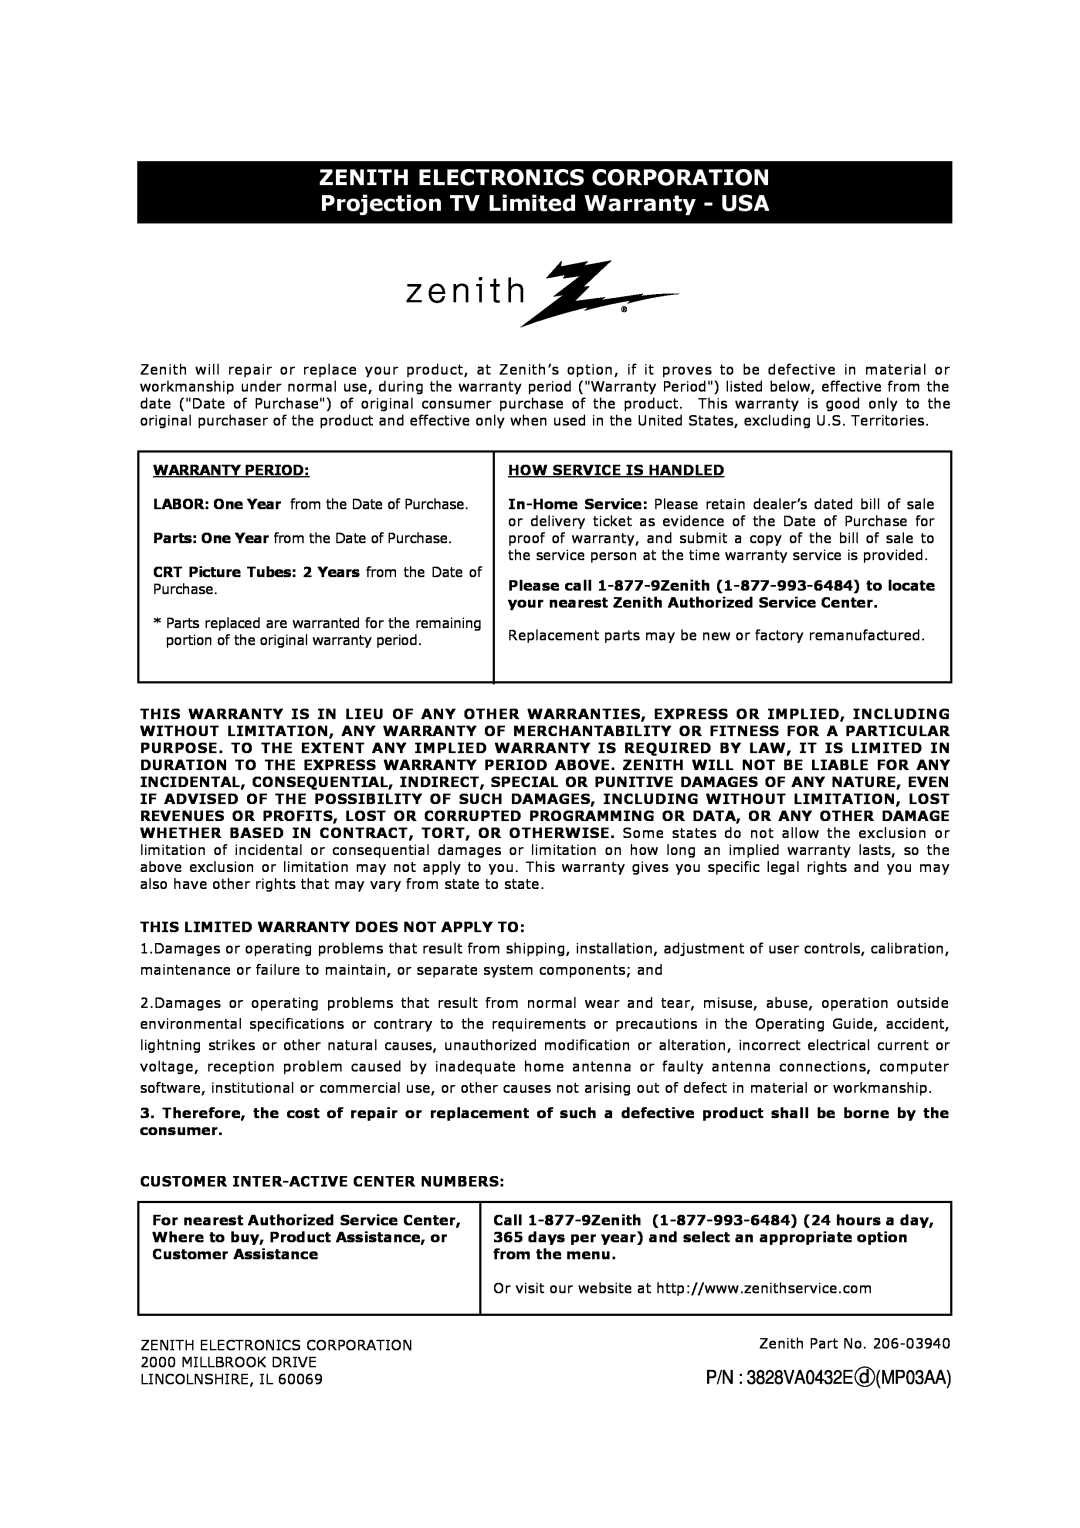 Zenith R40W46 warranty ZENITH ELECTRONICS CORPORATION Projection TV Limited Warranty - USA, P/N 3828VA0432E d MP03AA 